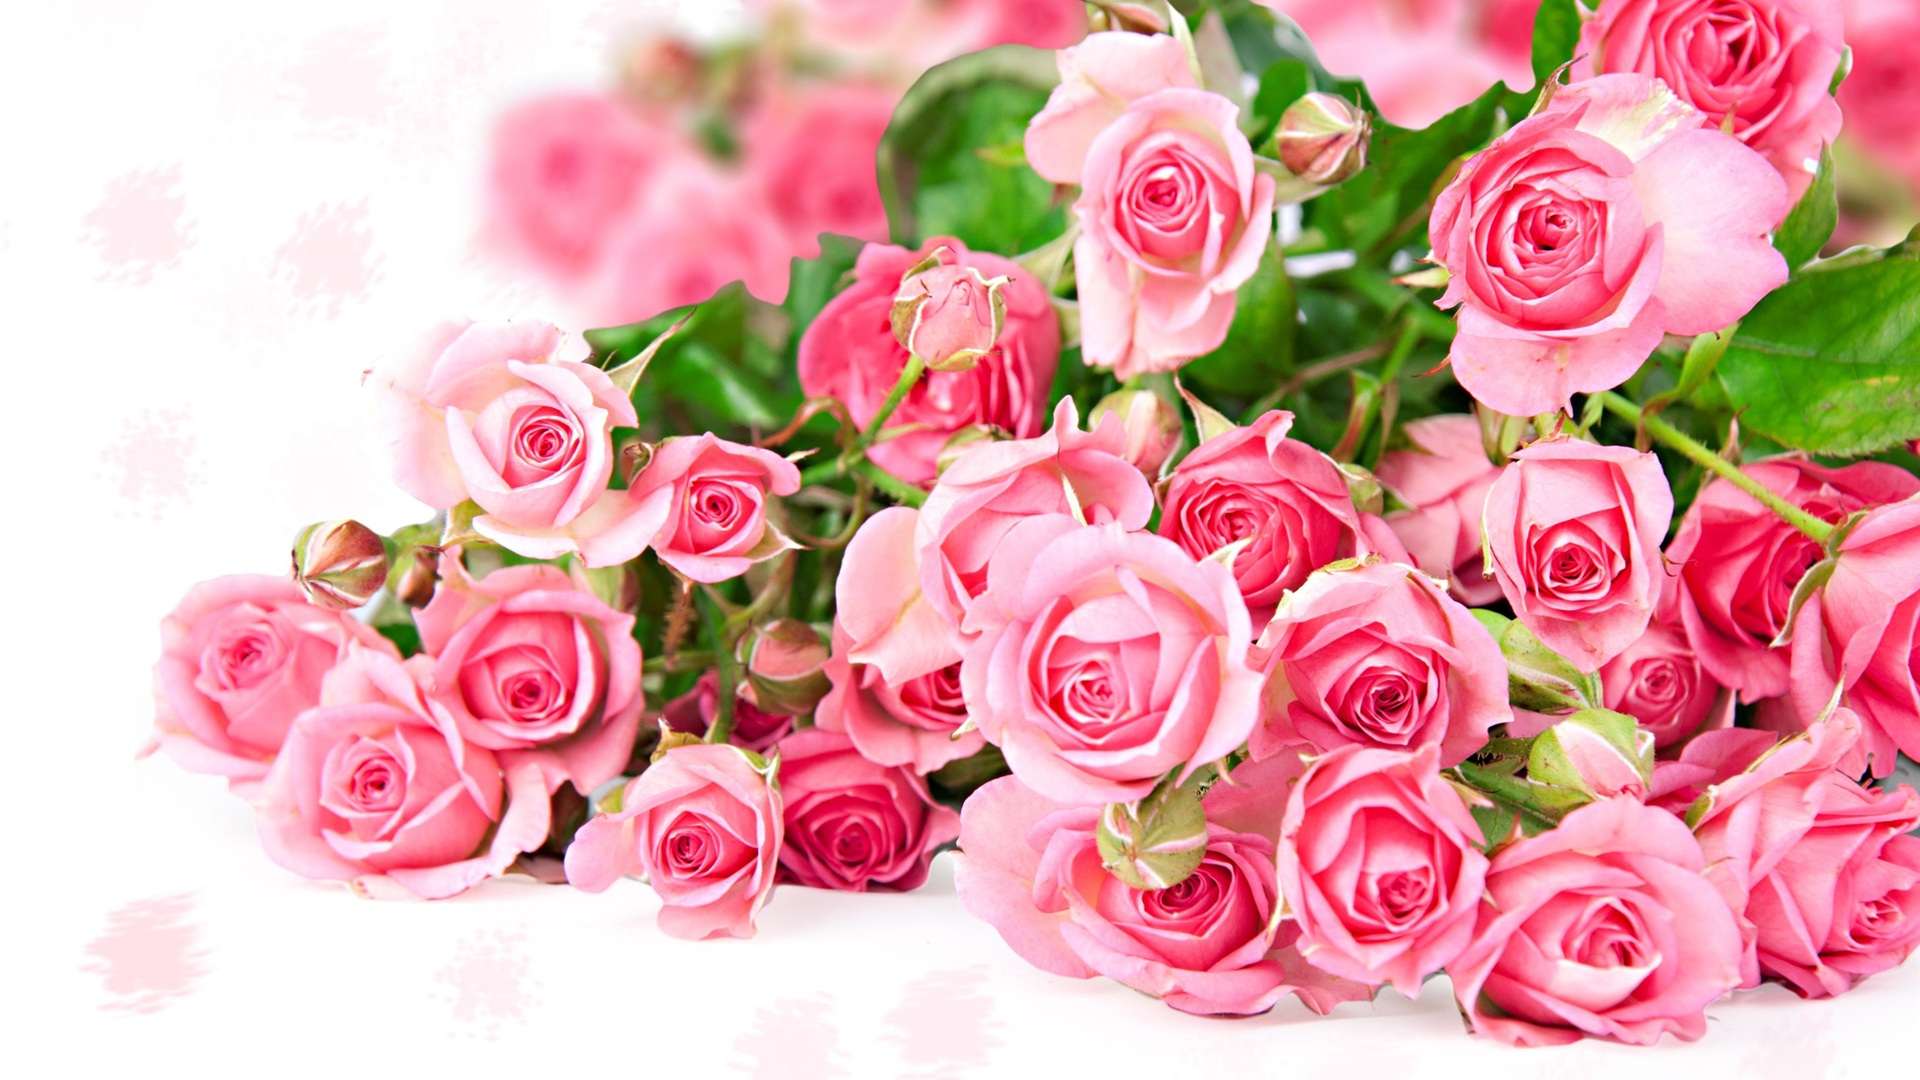 beautiful pink roses wallpapers free download,flower,garden roses,flowering plant,rose,pink